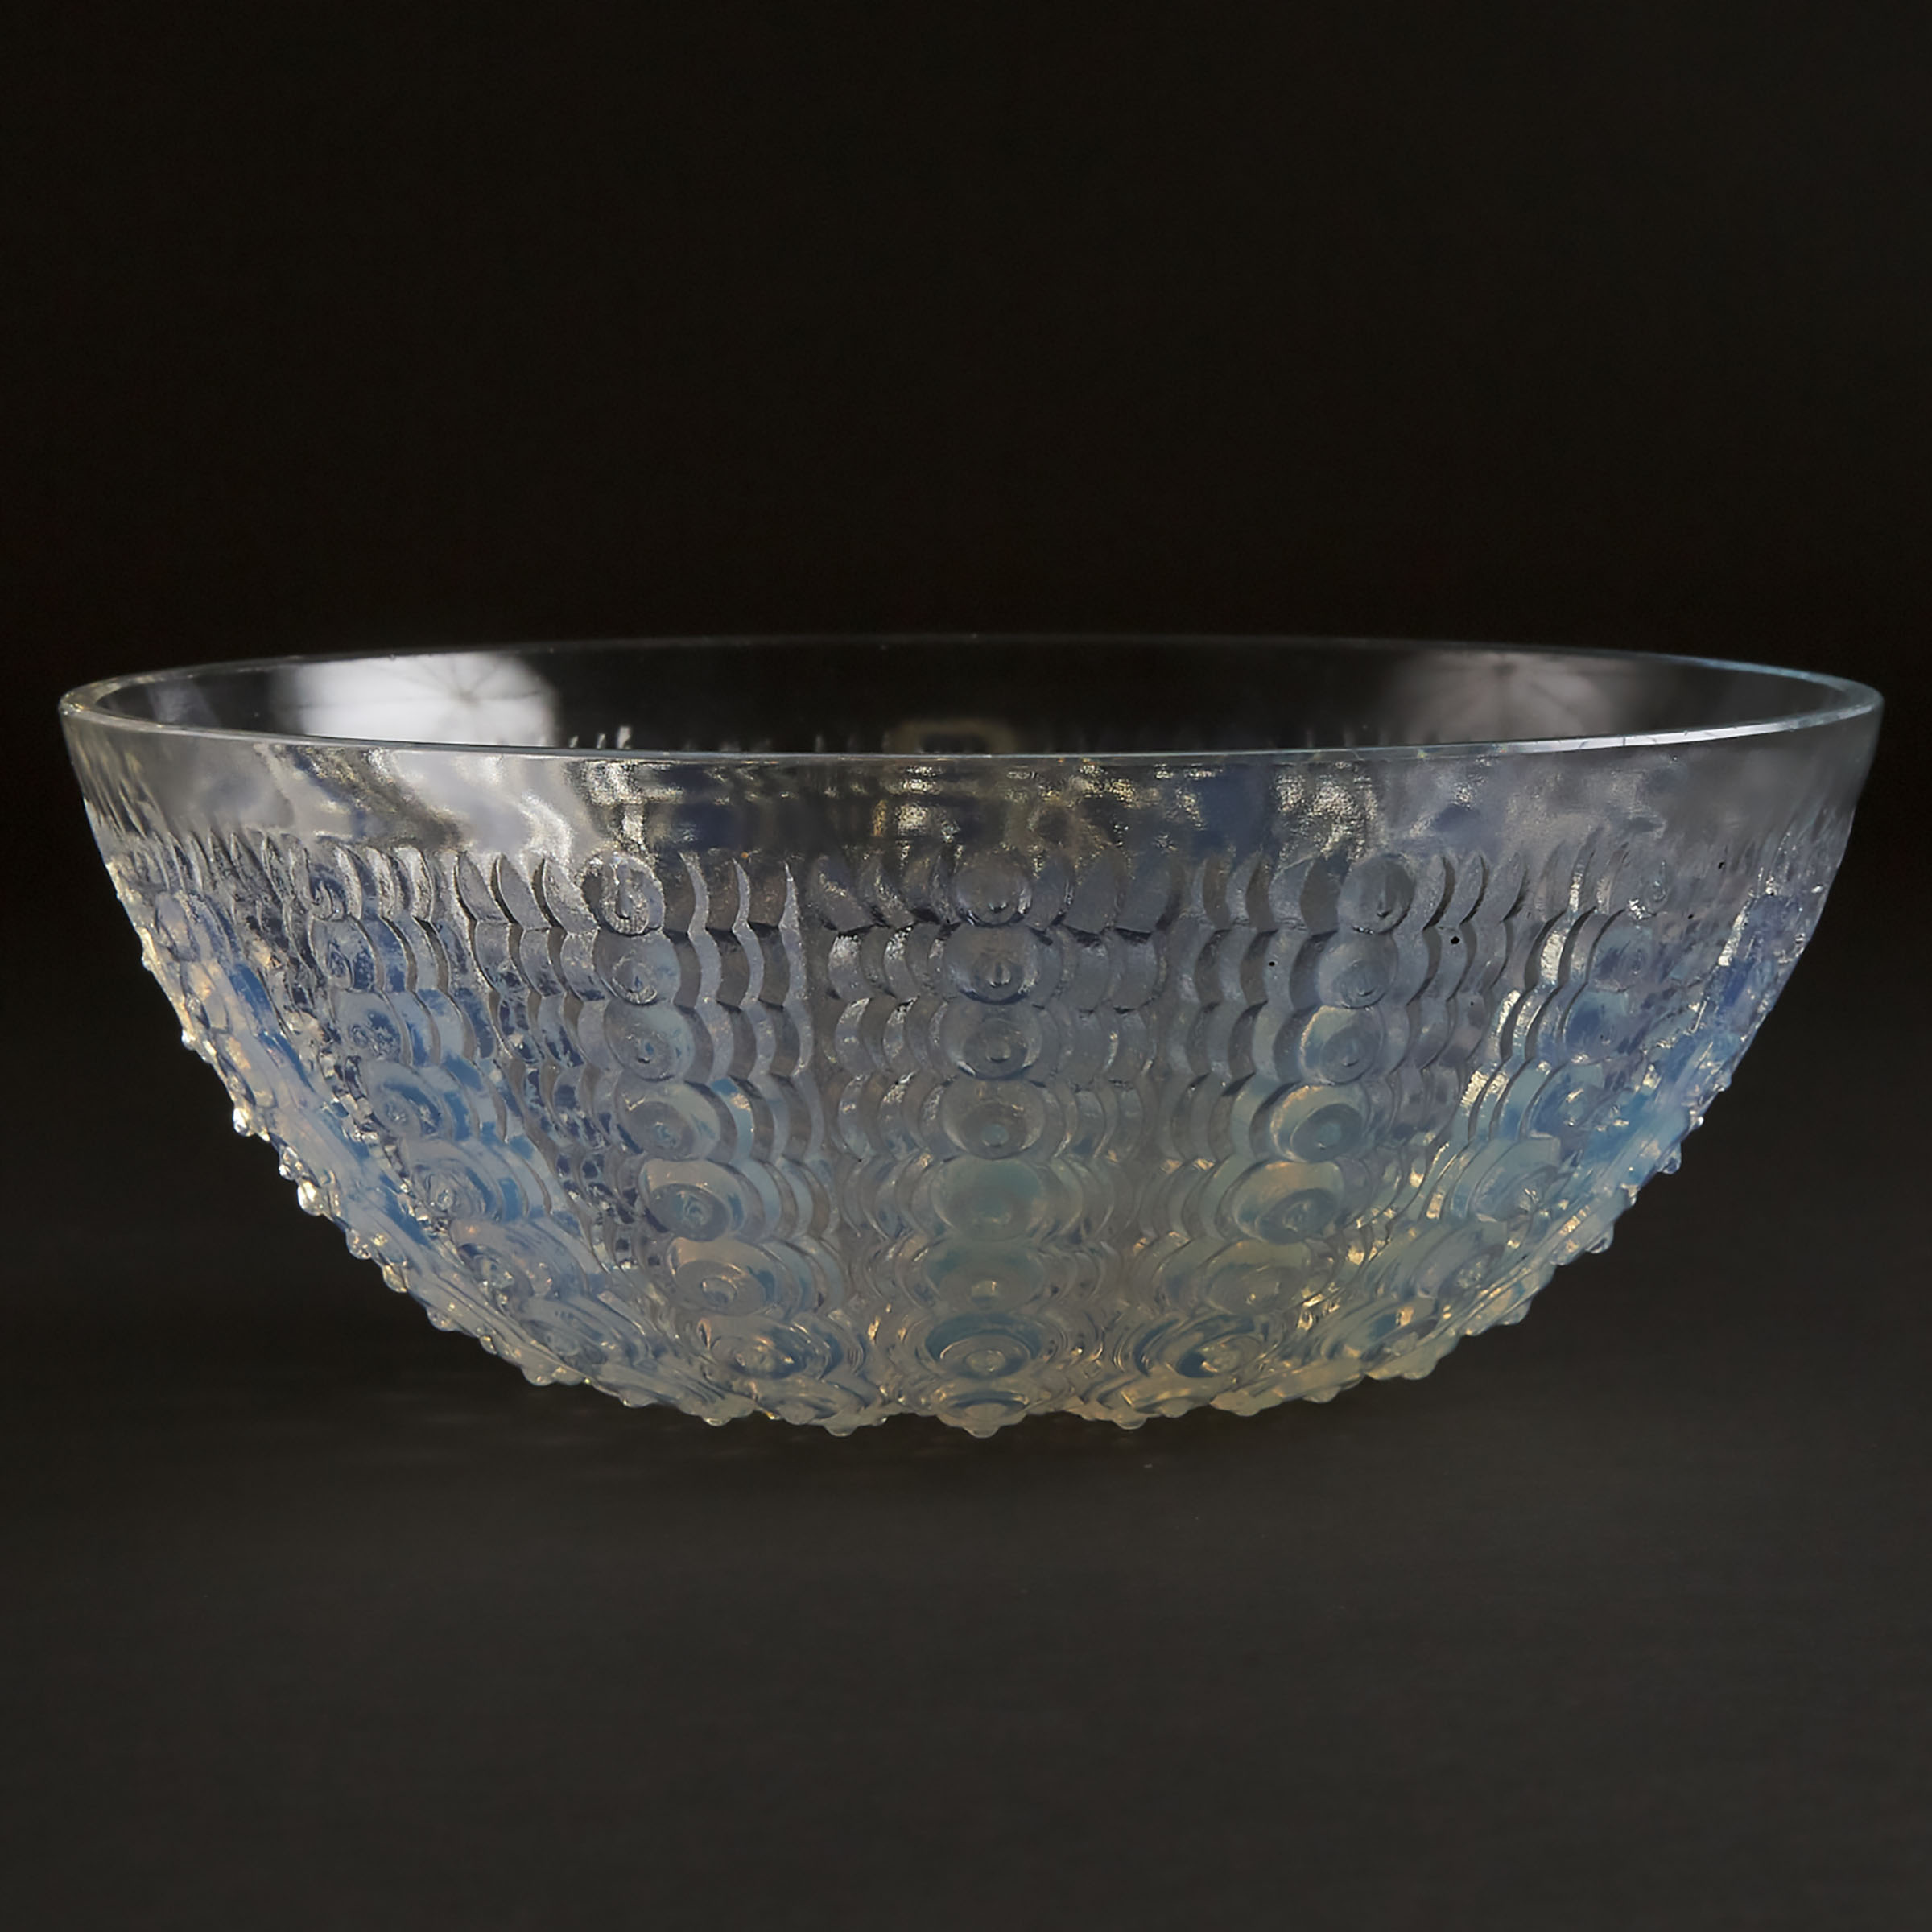 'Oursins', Lalique Moulded Opalescent Glass Bowl, 1930s